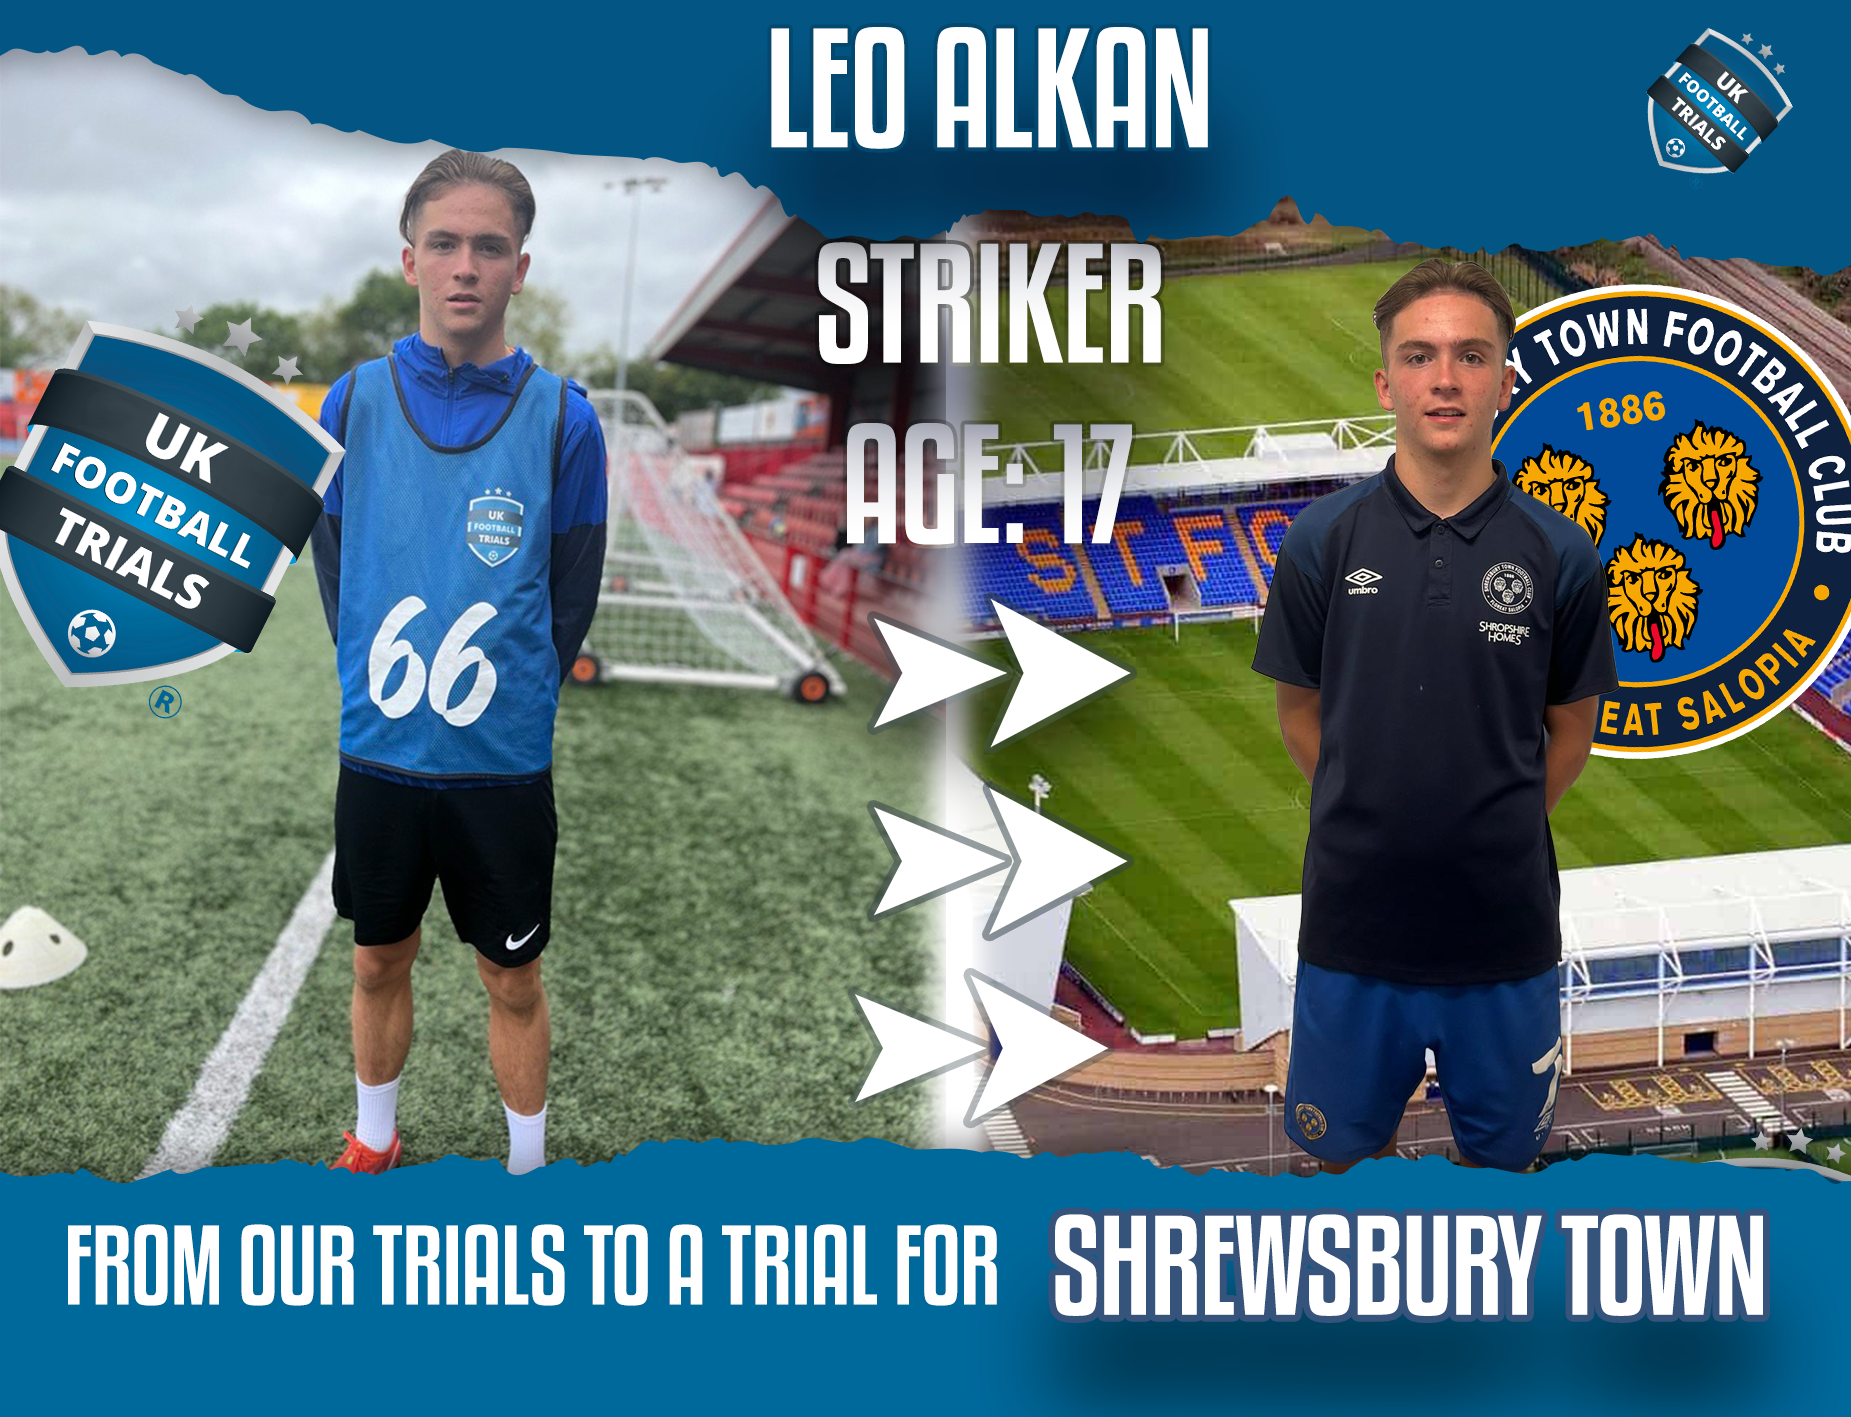 Leo Alkan - Age 17 - Trial at Shrewsbury town